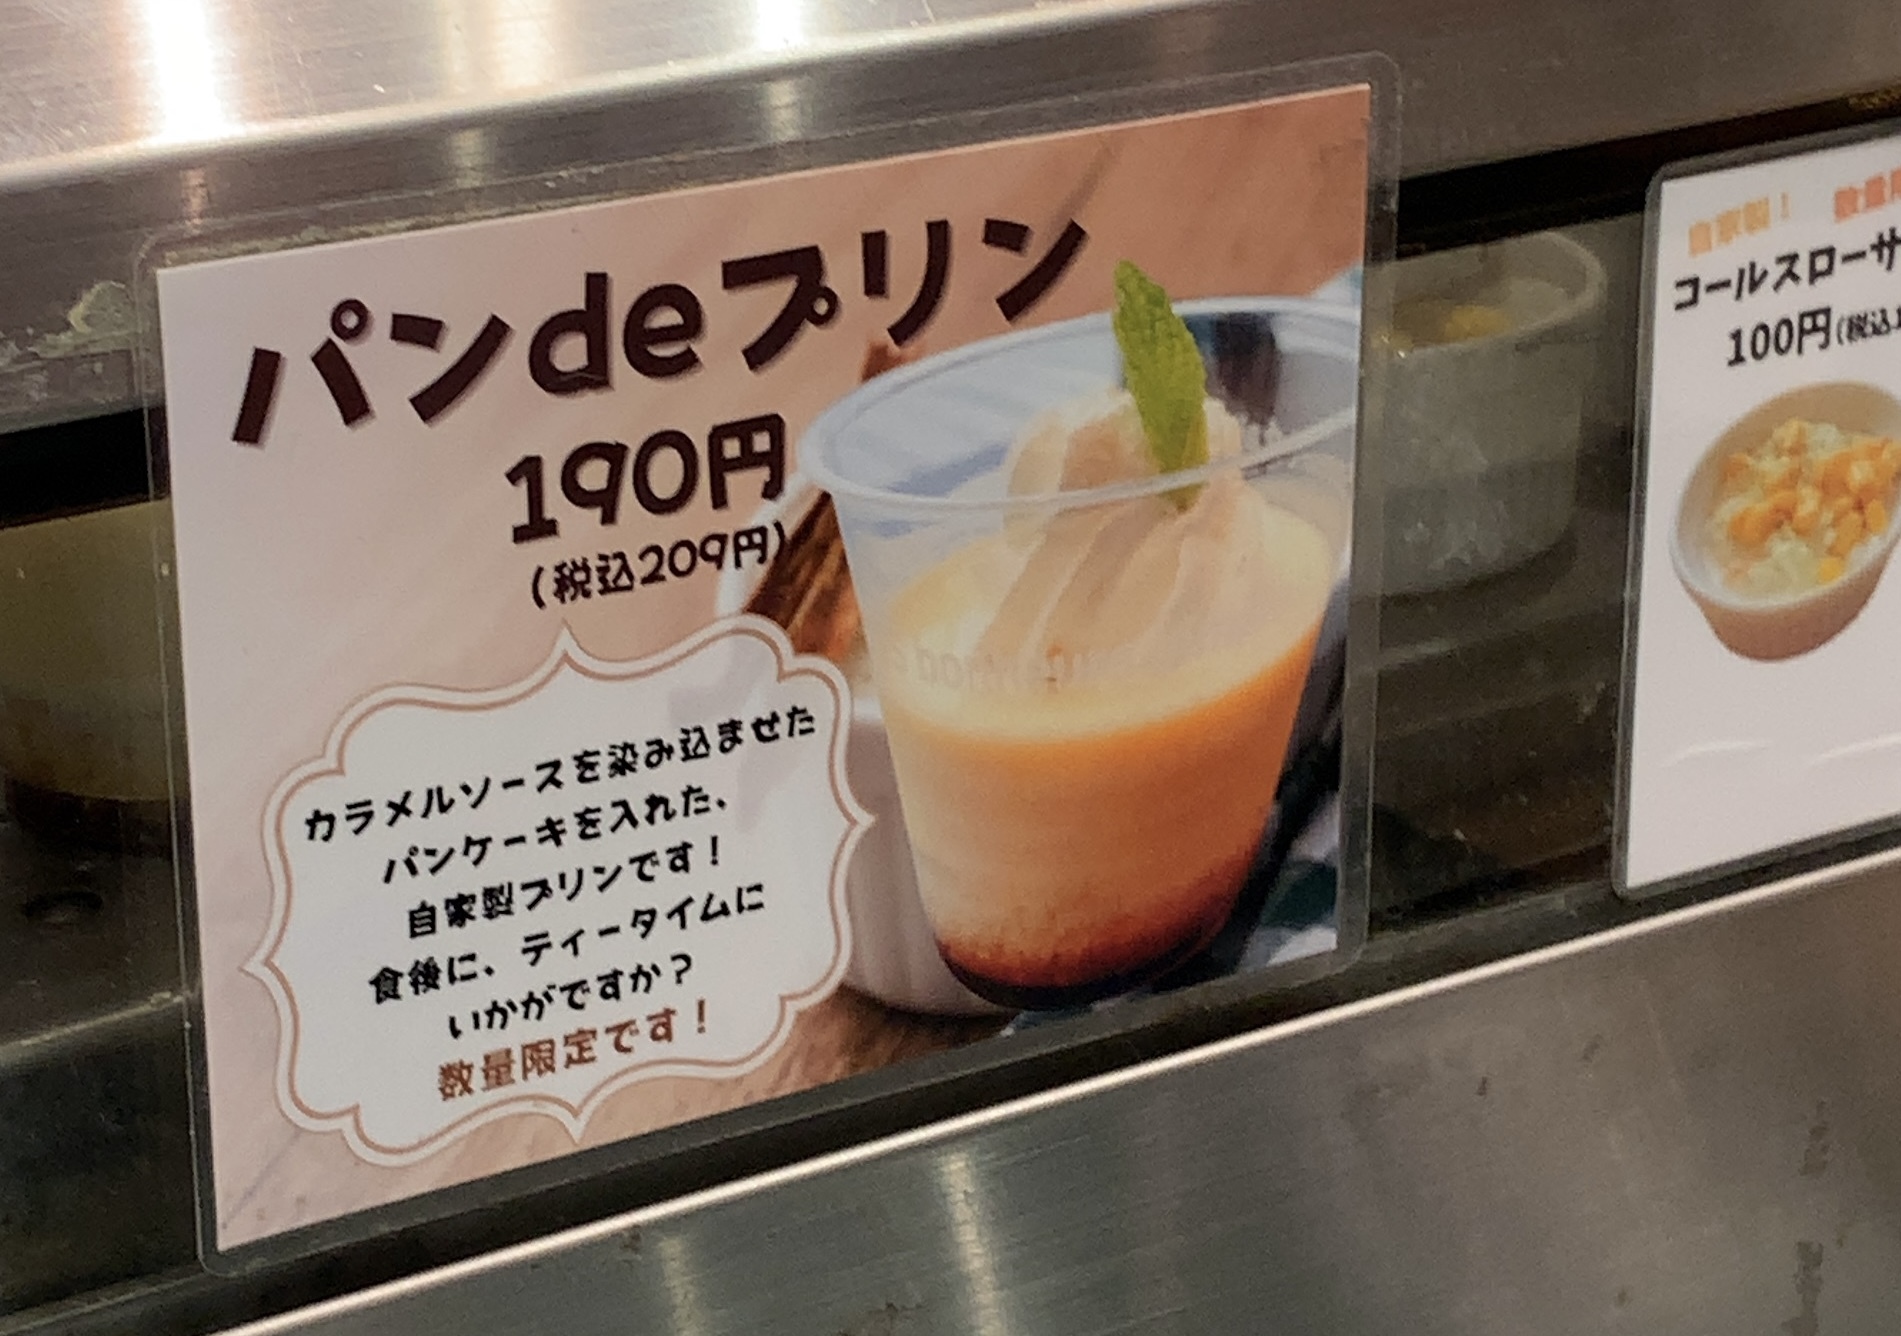 190円?!